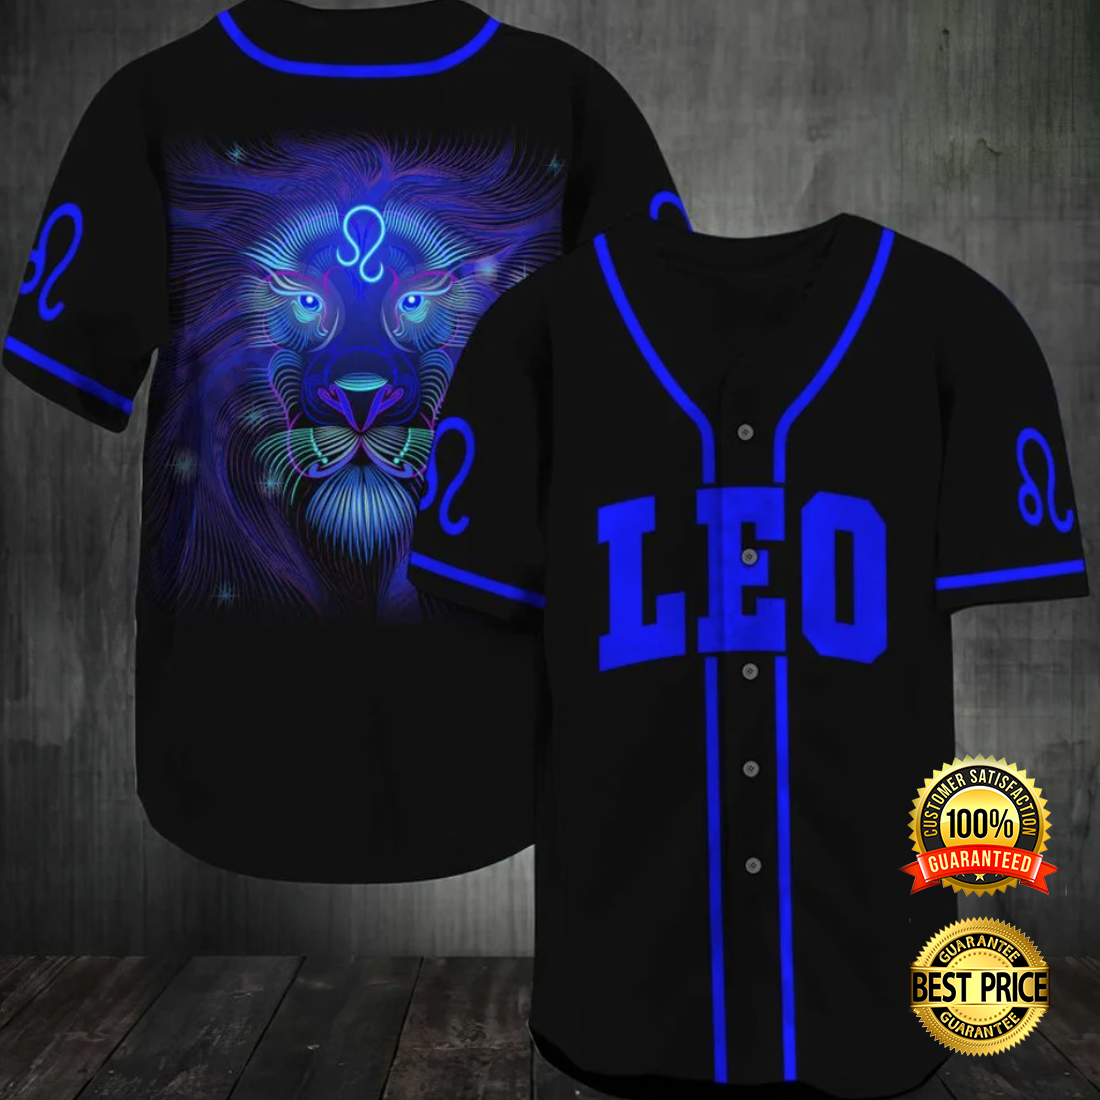 Leo baseball jersey 4